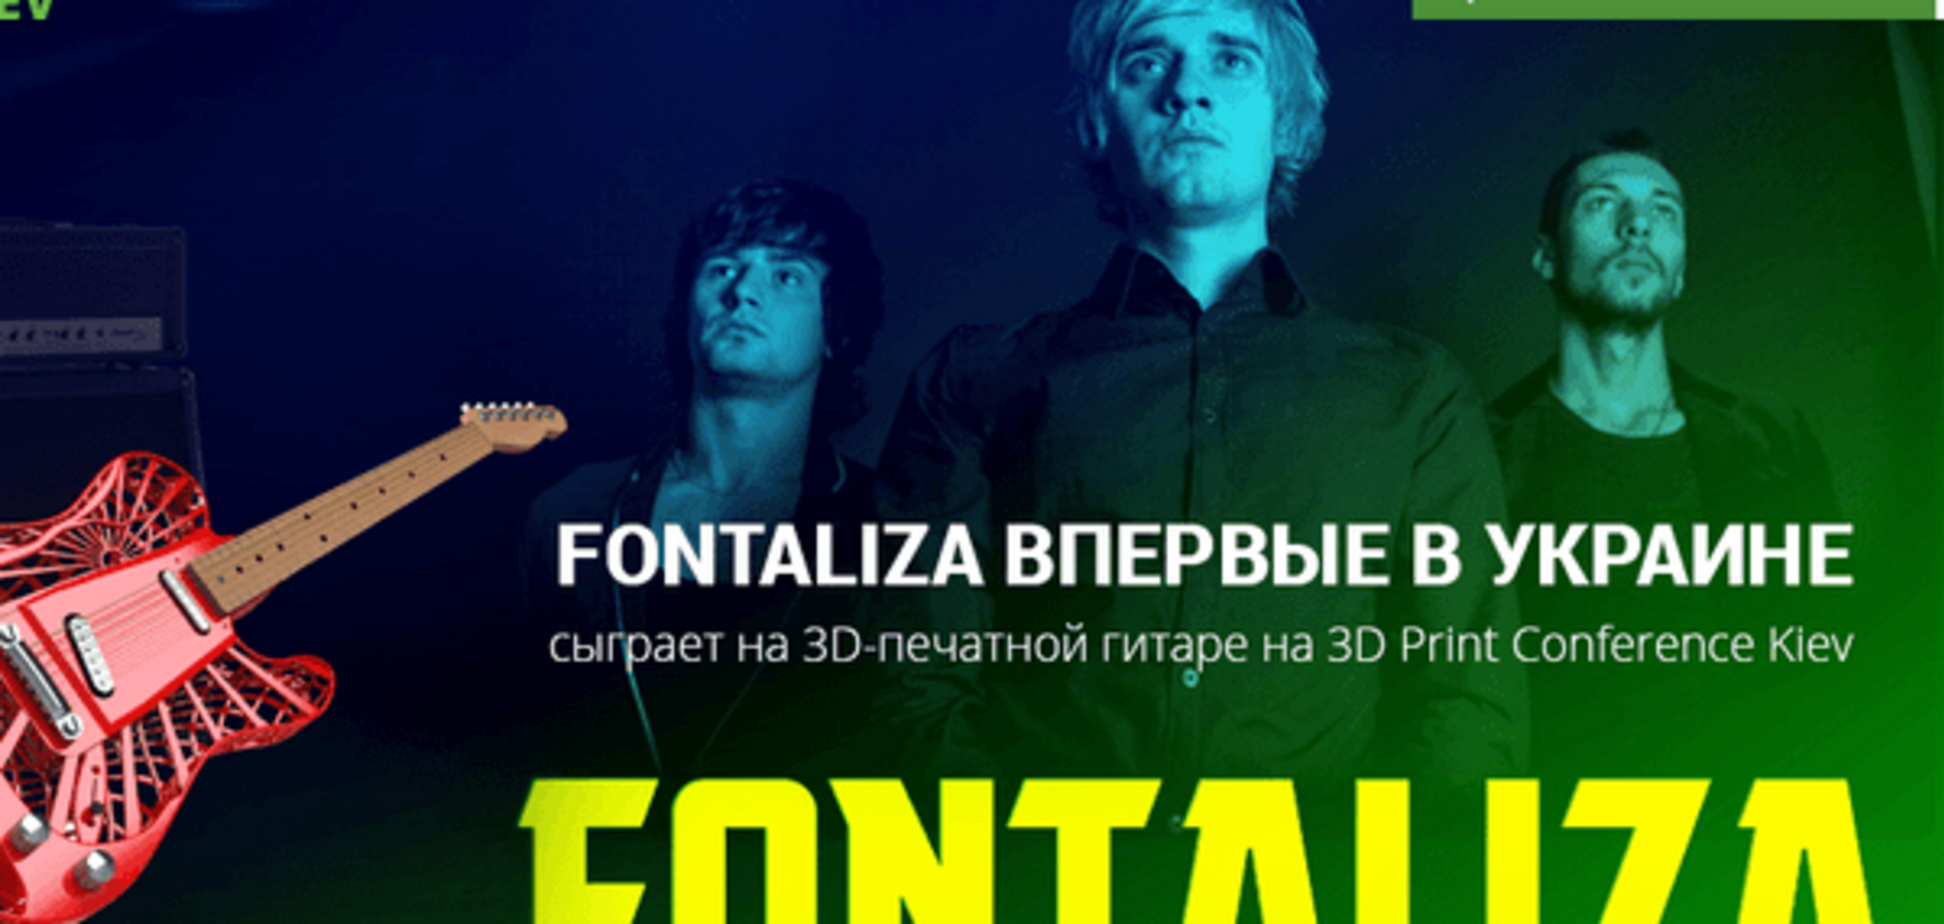 Fontaliza впервые в Украине сыграет на 3D-печатной гитаре на 3D Print Conference Kiev